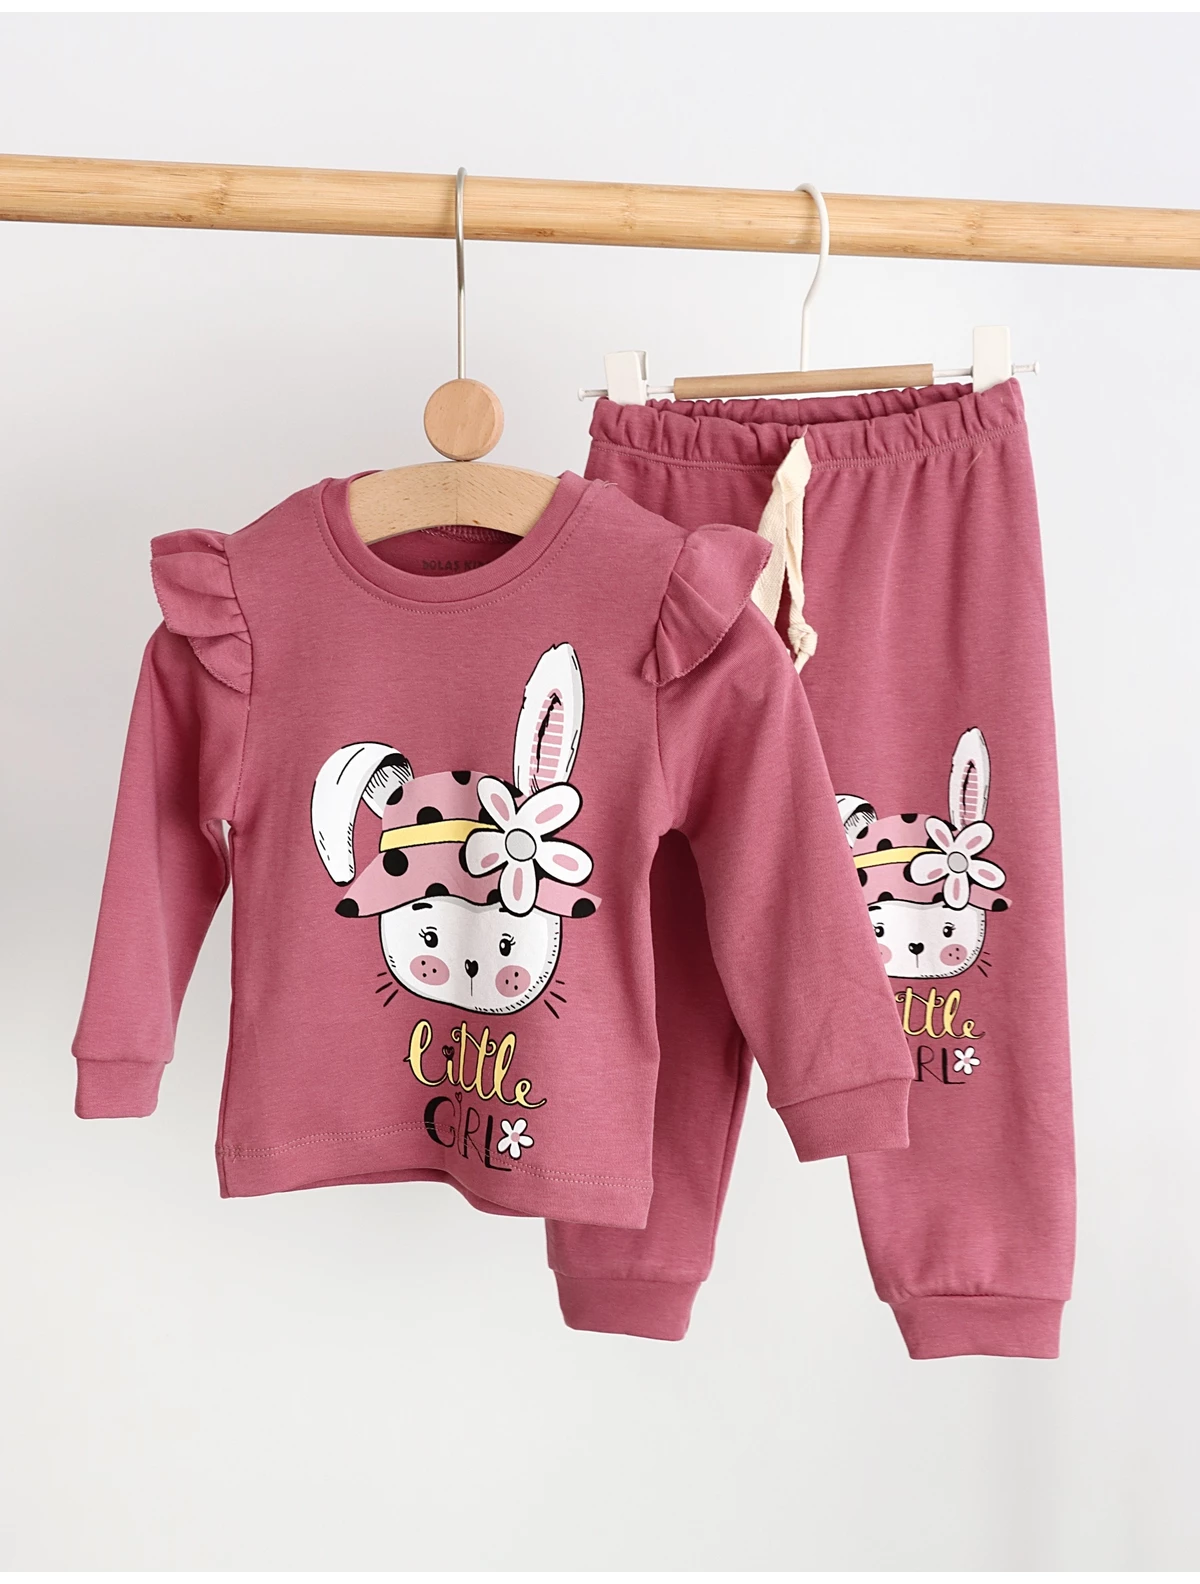 Pijama Little Girl Iepuras roz-prafuit